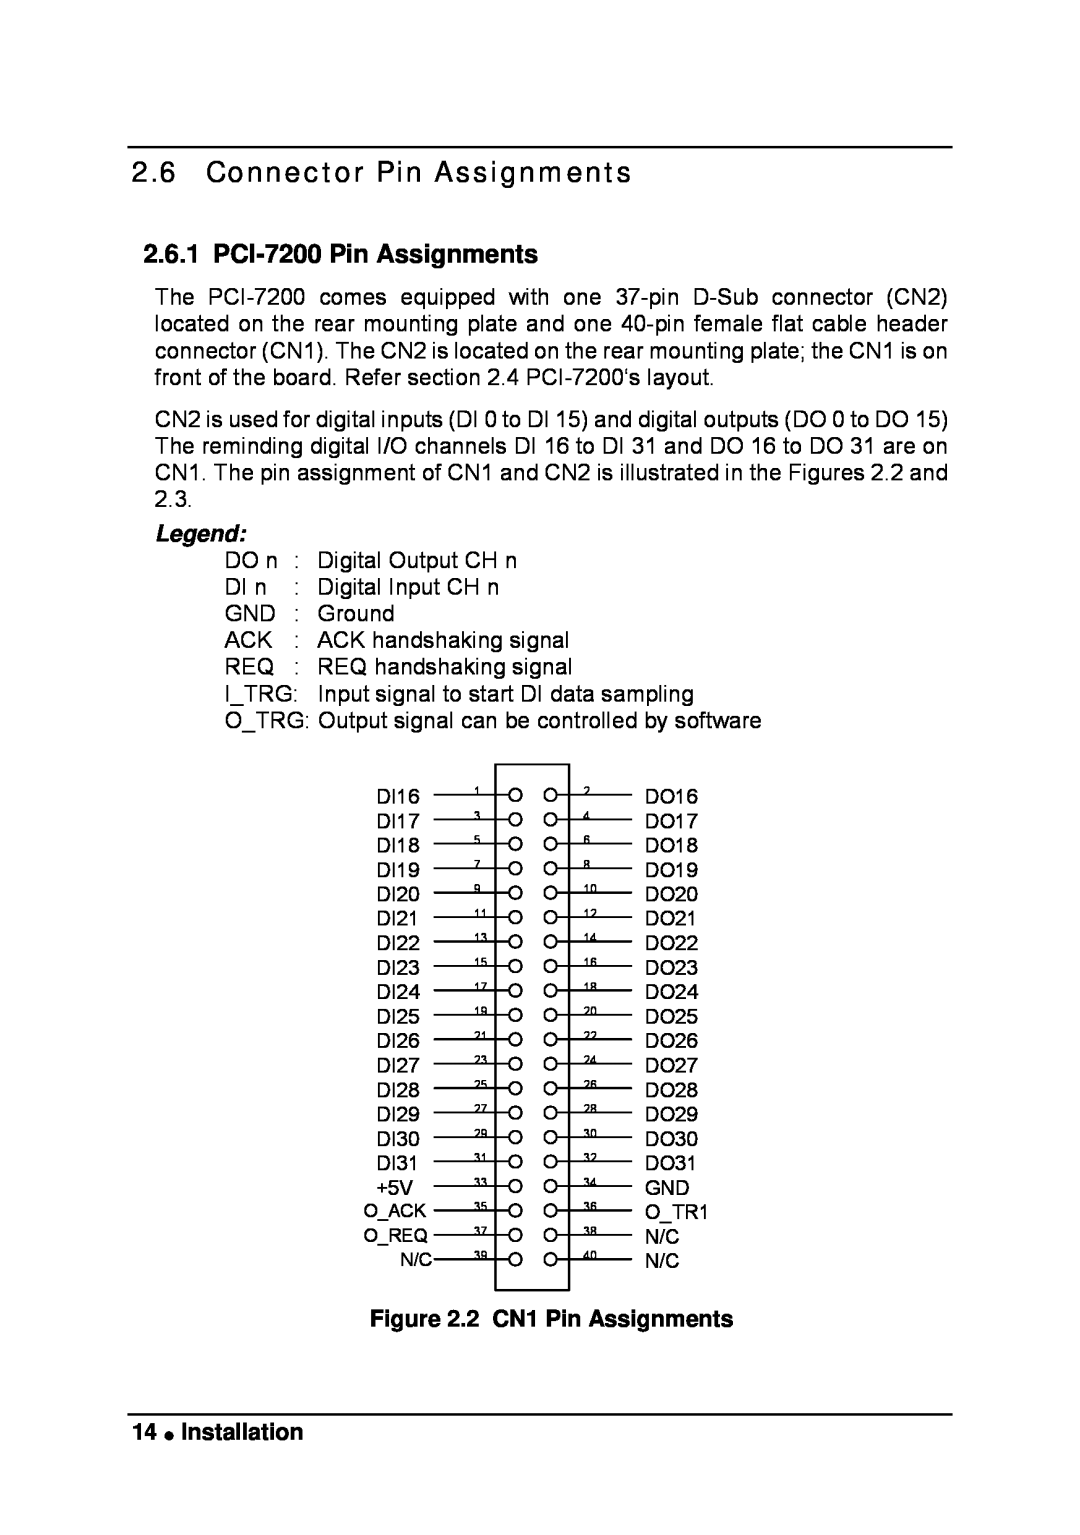 Intel LPCI-7200S manual Connector Pin Assignments, PCI-7200 Pin Assignments, 2 CN1 Pin Assignments 14 Installation 